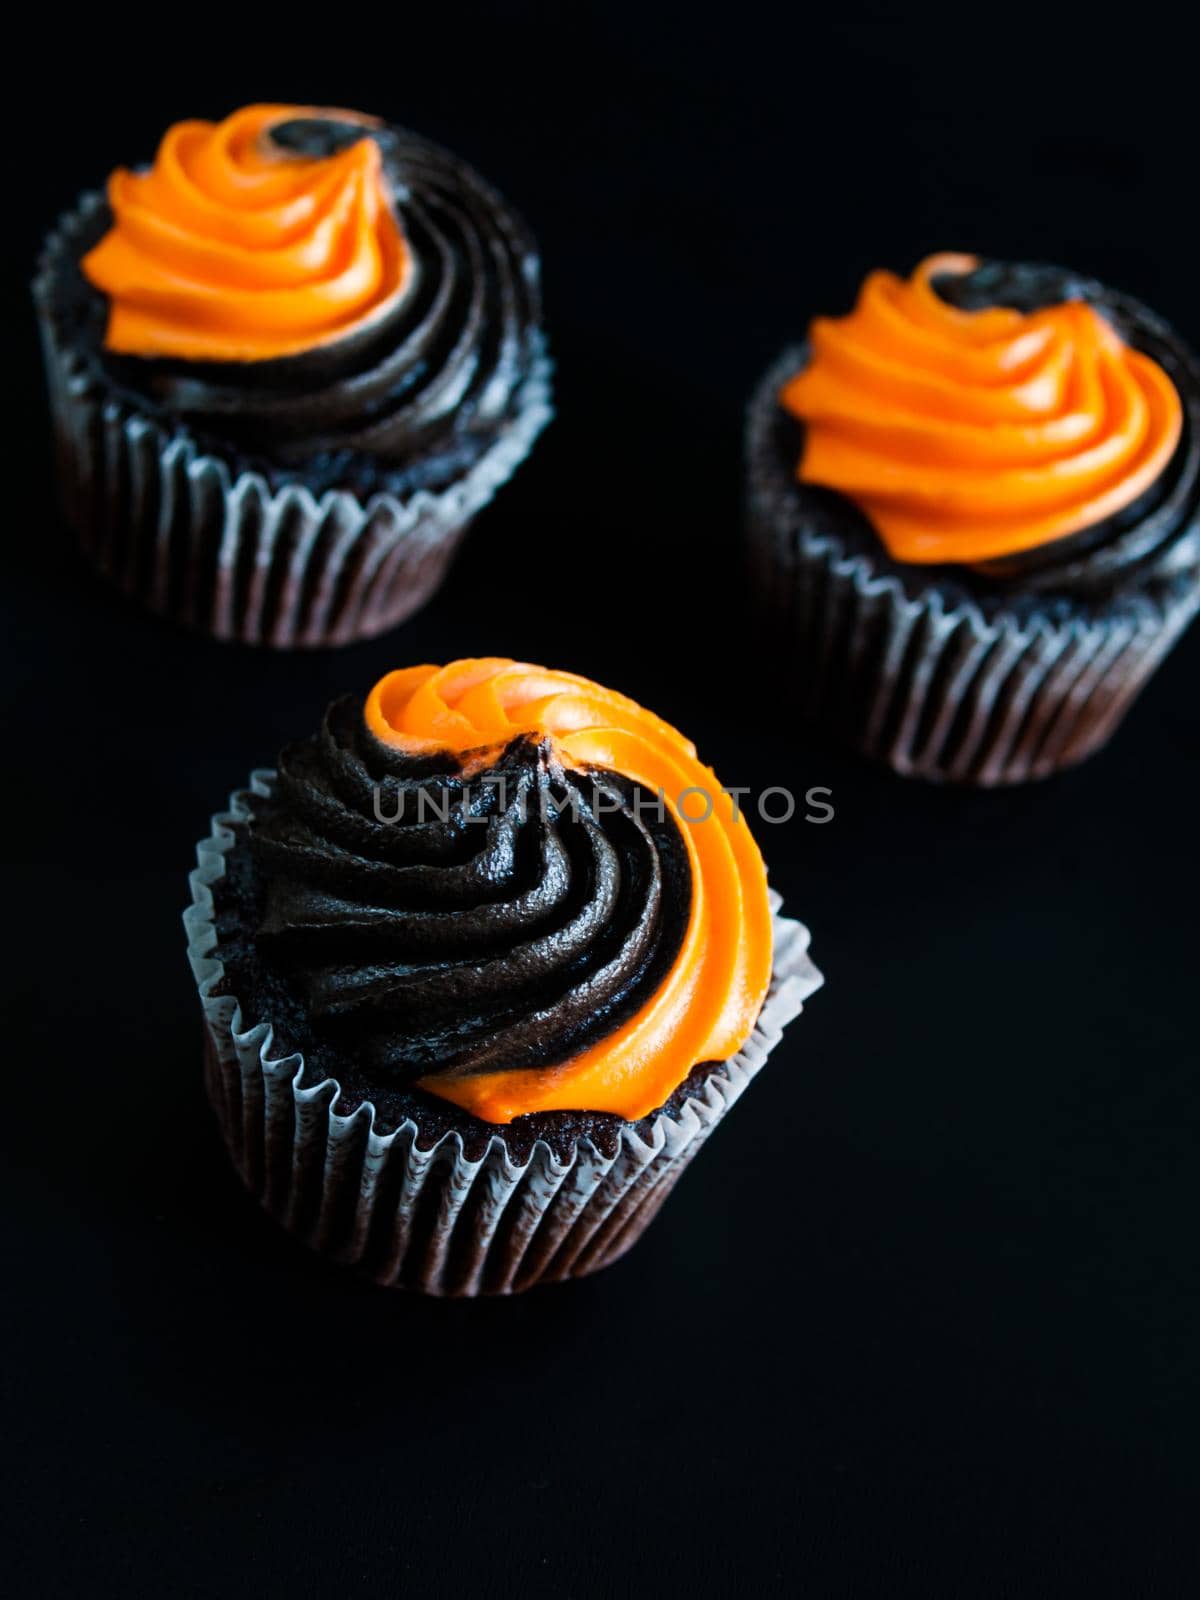 Halloween Cupcakes by arinahabich